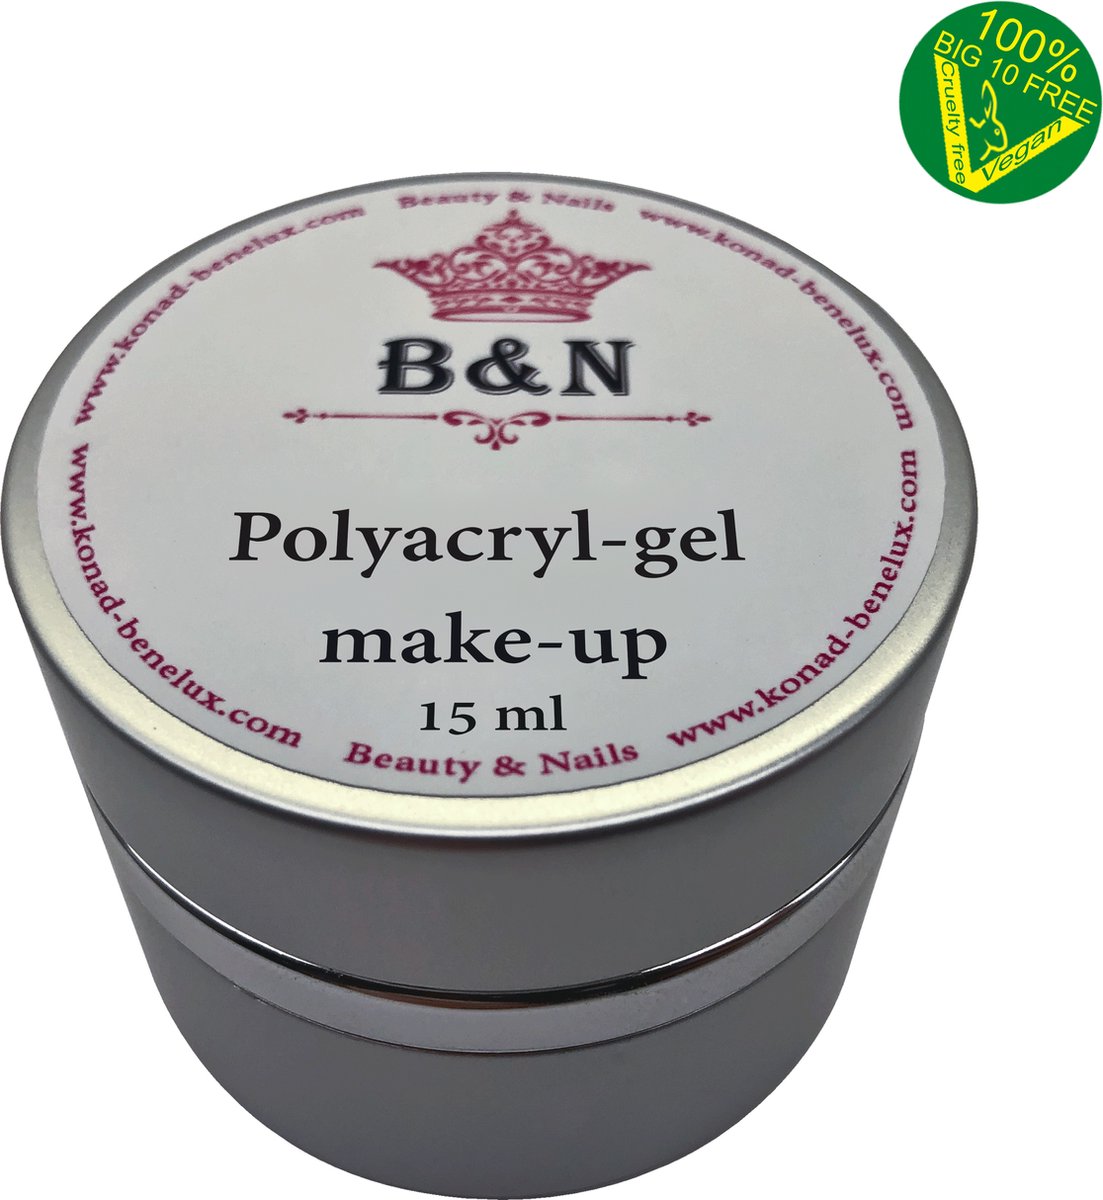 Polyacryl make-up - 15 ml | B&N - VEGAN - polygel